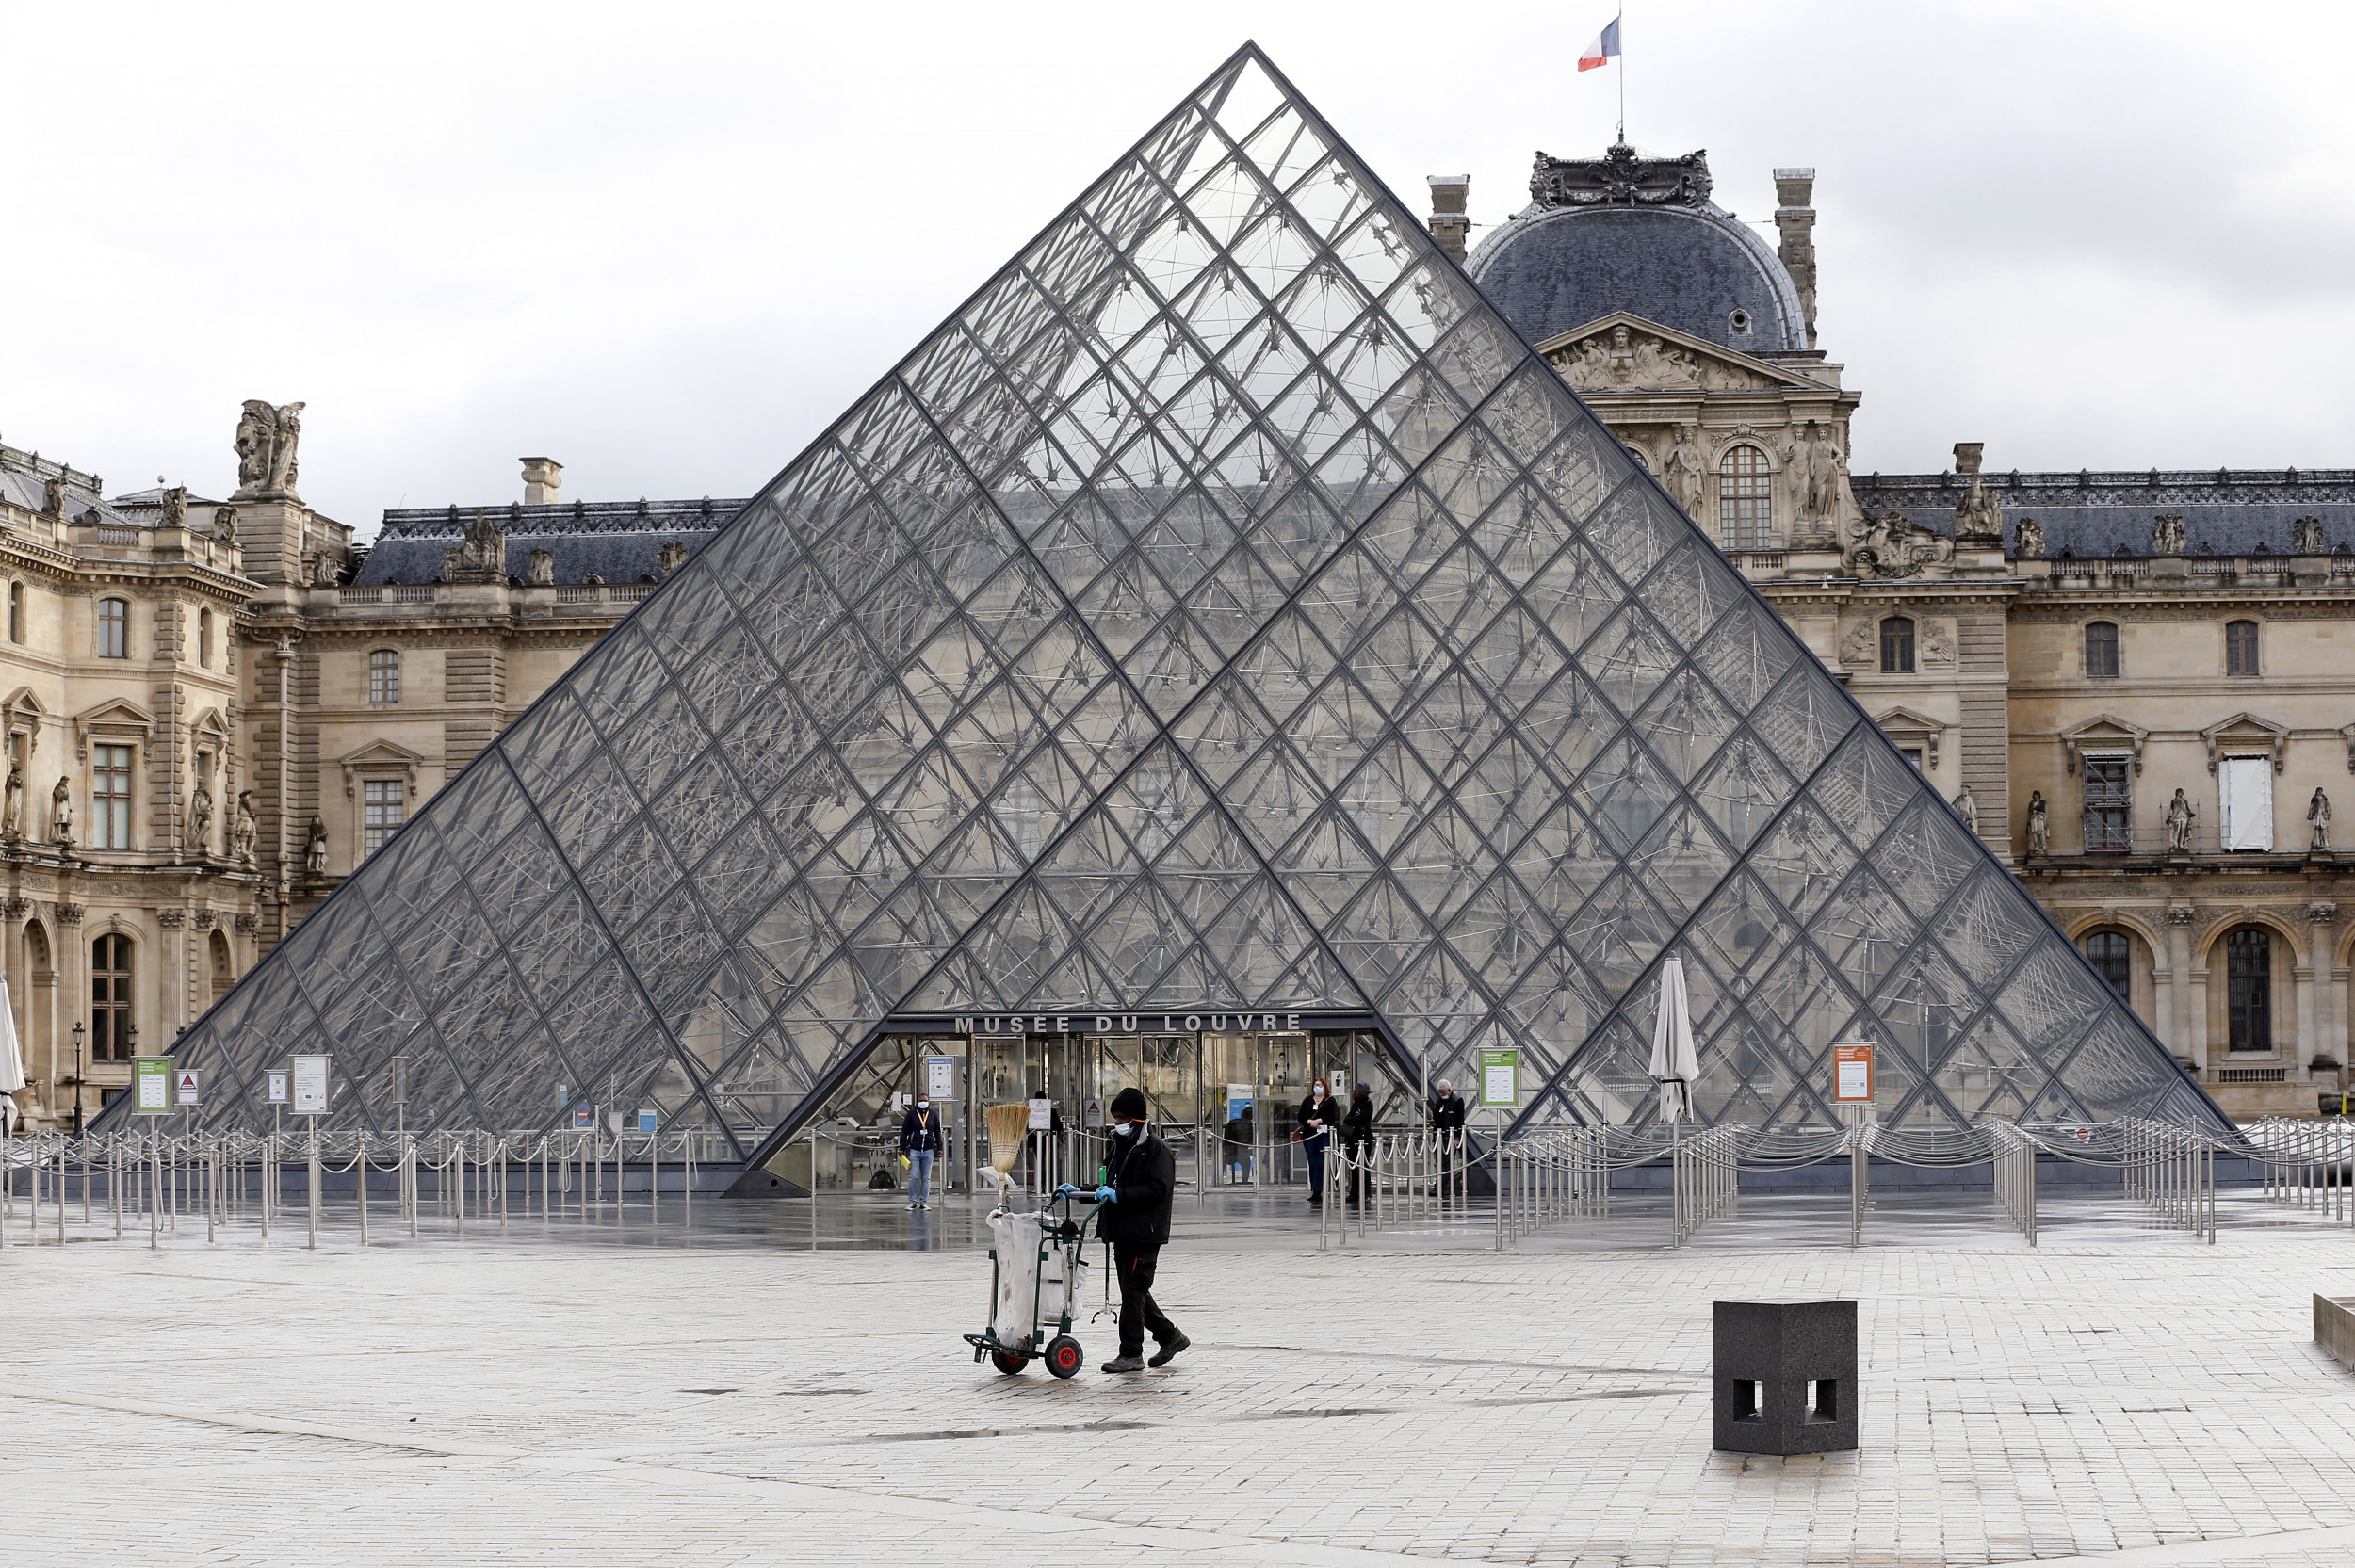 Louis Vuitton Security Guard Slaps Child at Paris Fashion Week, Video Shows